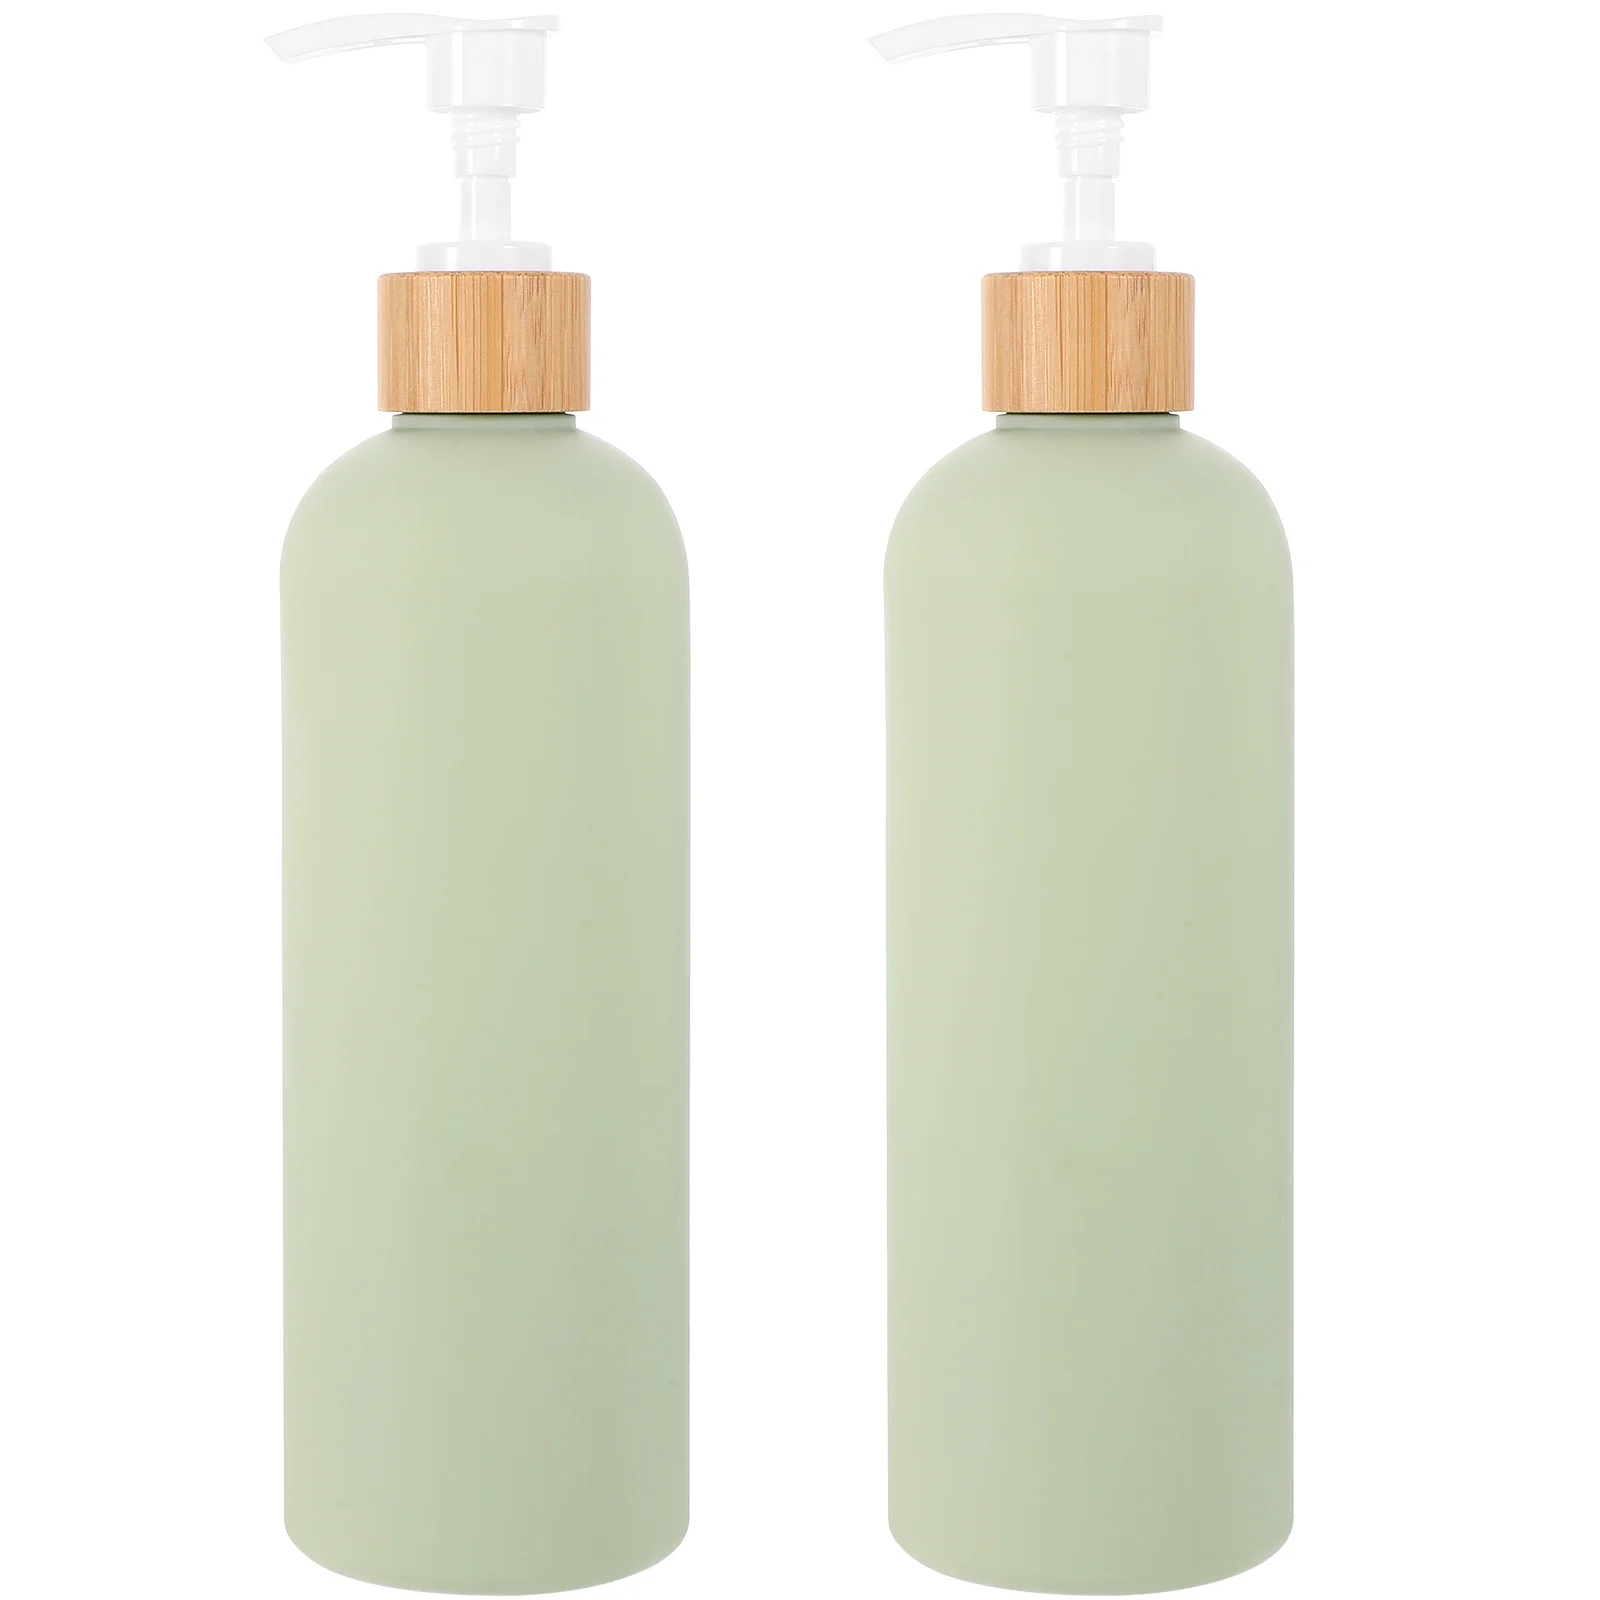 

2 Pcs Press Pump Dispenser Dish Soap Body Wash Lotion Bottle Dispensers Refillable Shampoo Conditioner Bottles Bamboo